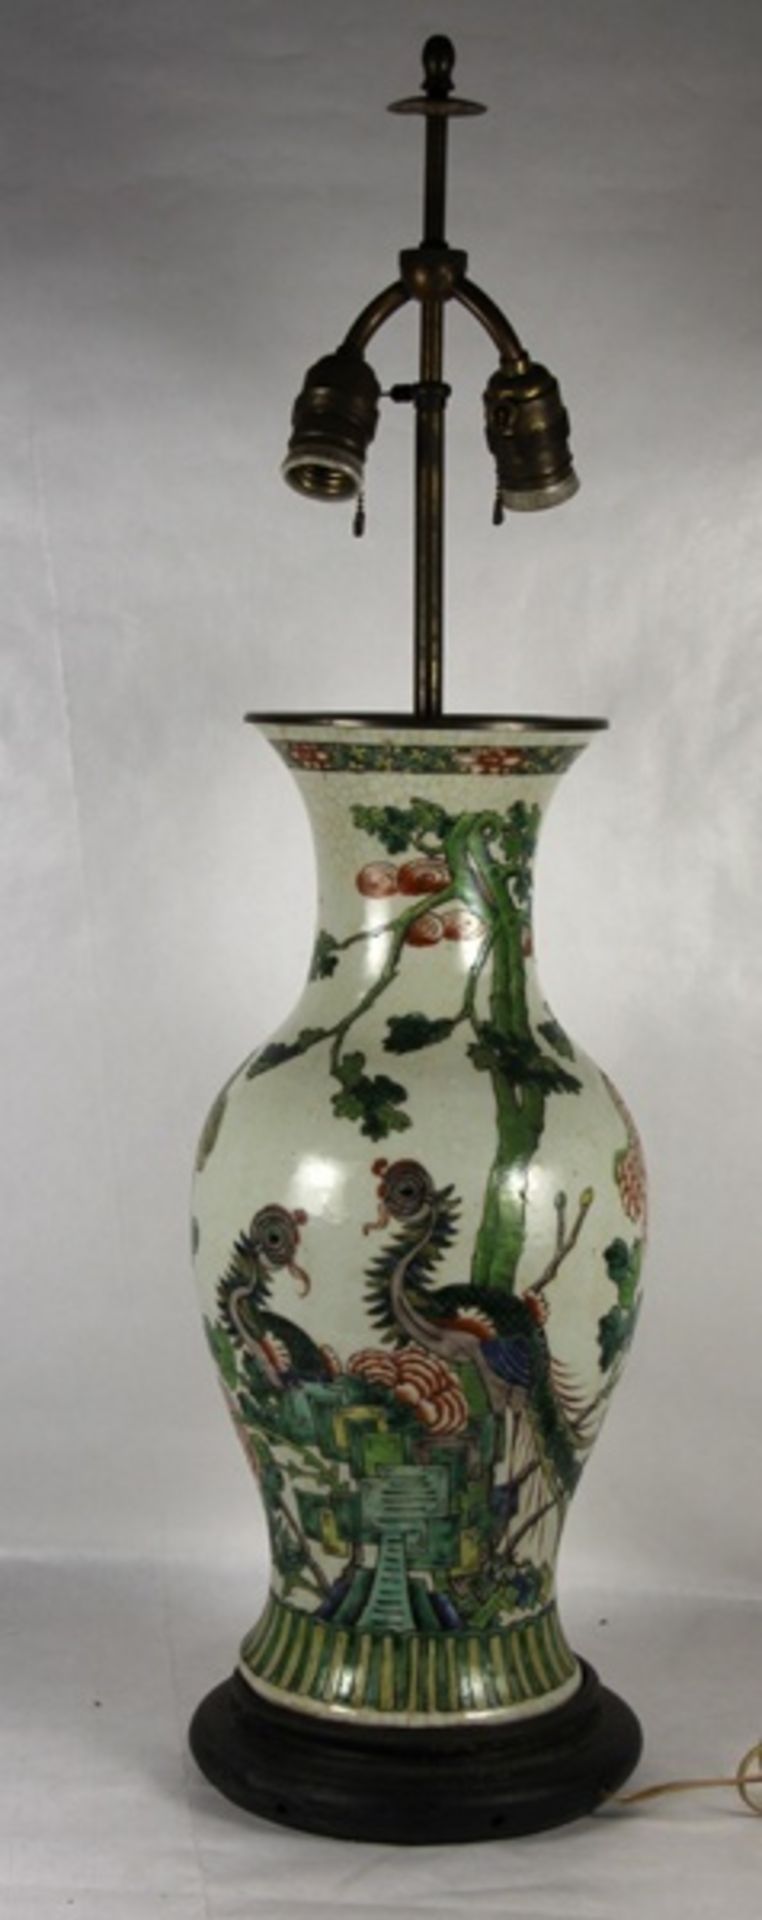 große famille verte-VaseEnde 19. Jhd., China, große Vase mit famille verte-Dekor, später zu